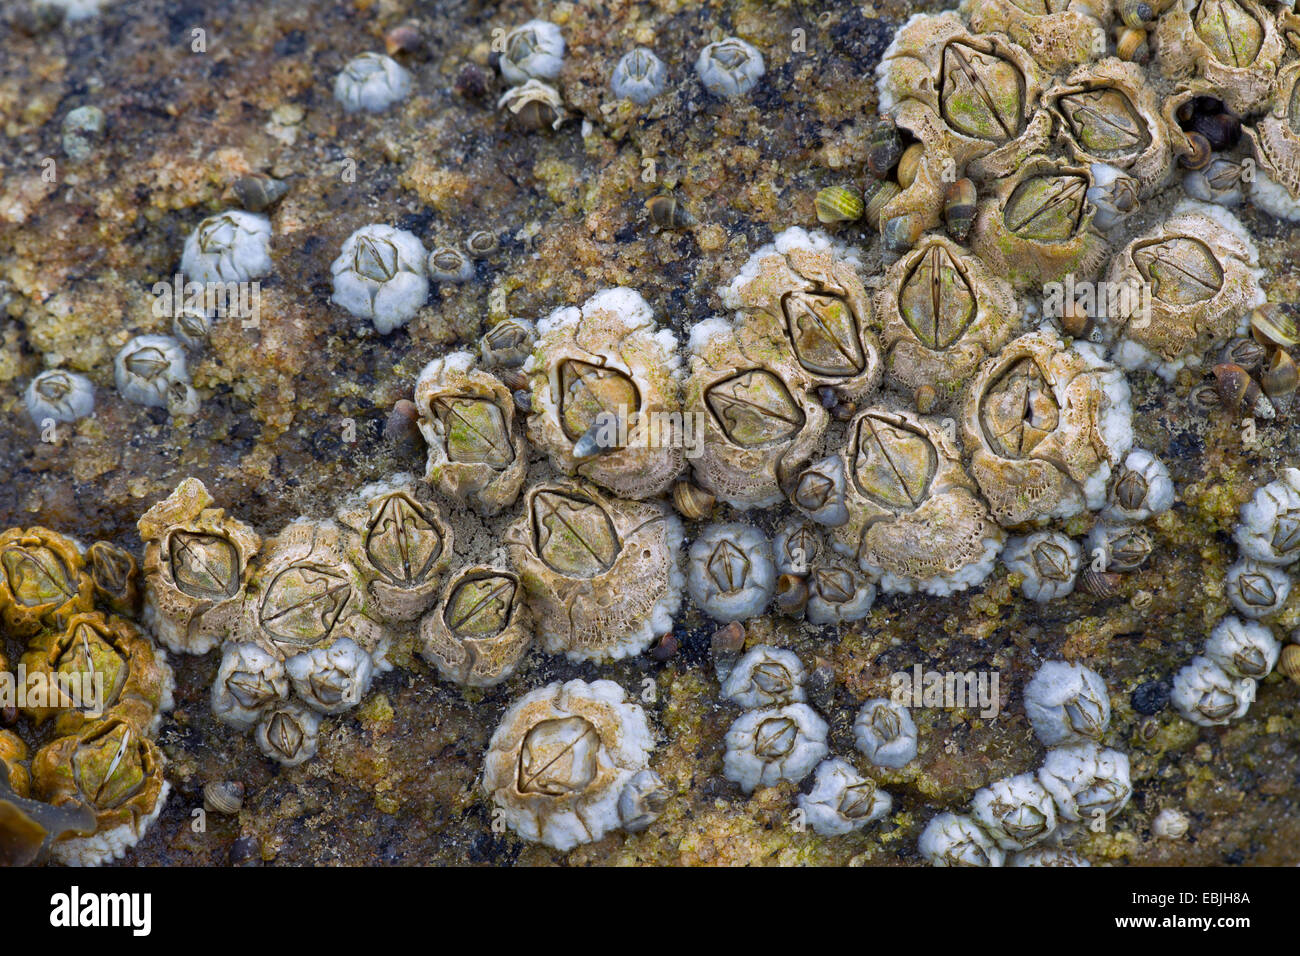 northern rock barnacle, acorn barnacle, common rock barnacle (Semibalanus balanoides, Balanus balanoides), on a coastal rock, Germany, Schleswig-Holstein, Schleswig-Holstein Wadden Sea National Park Stock Photo